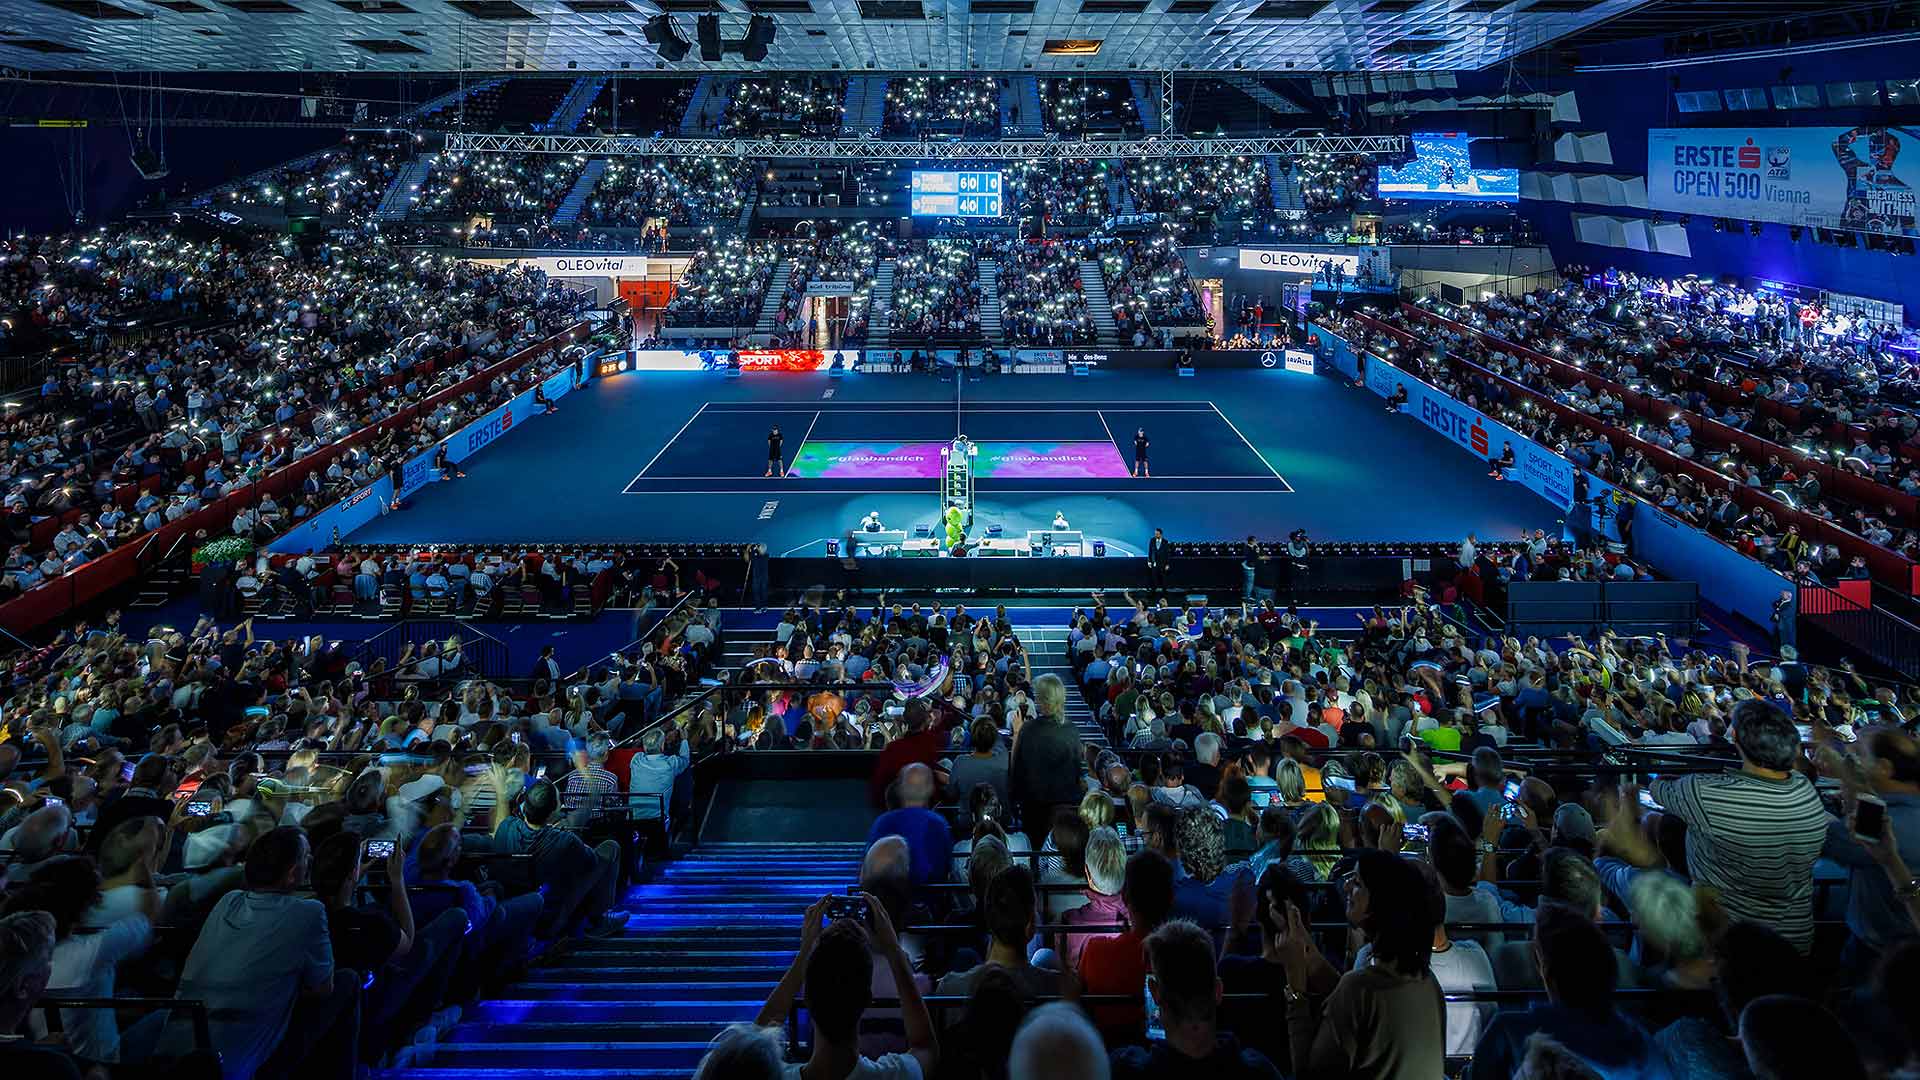 SINNER vs SHELTON • ATP Vienna 2023 • LIVE Tennis Play-by-Play Stream 